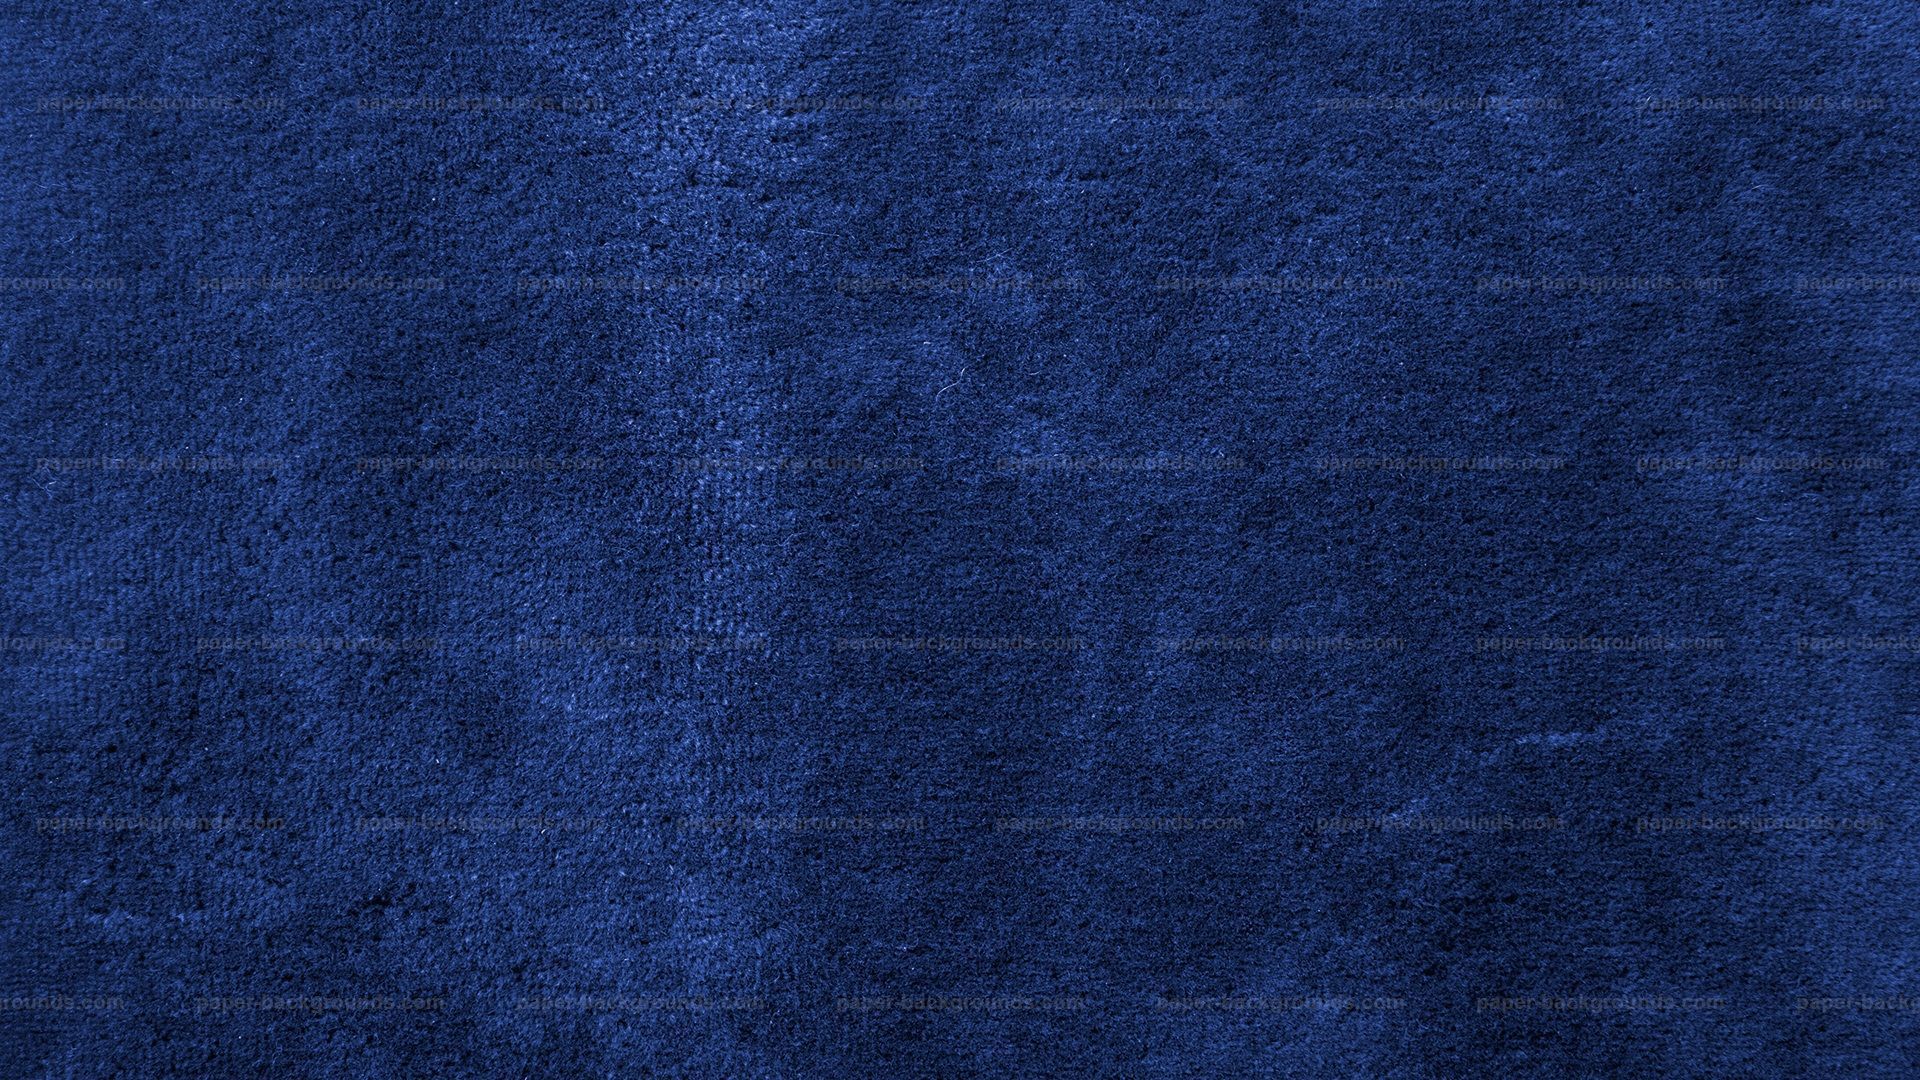 Blue Velvet Texture Background HD 1920 X 1080P | Cuzimage